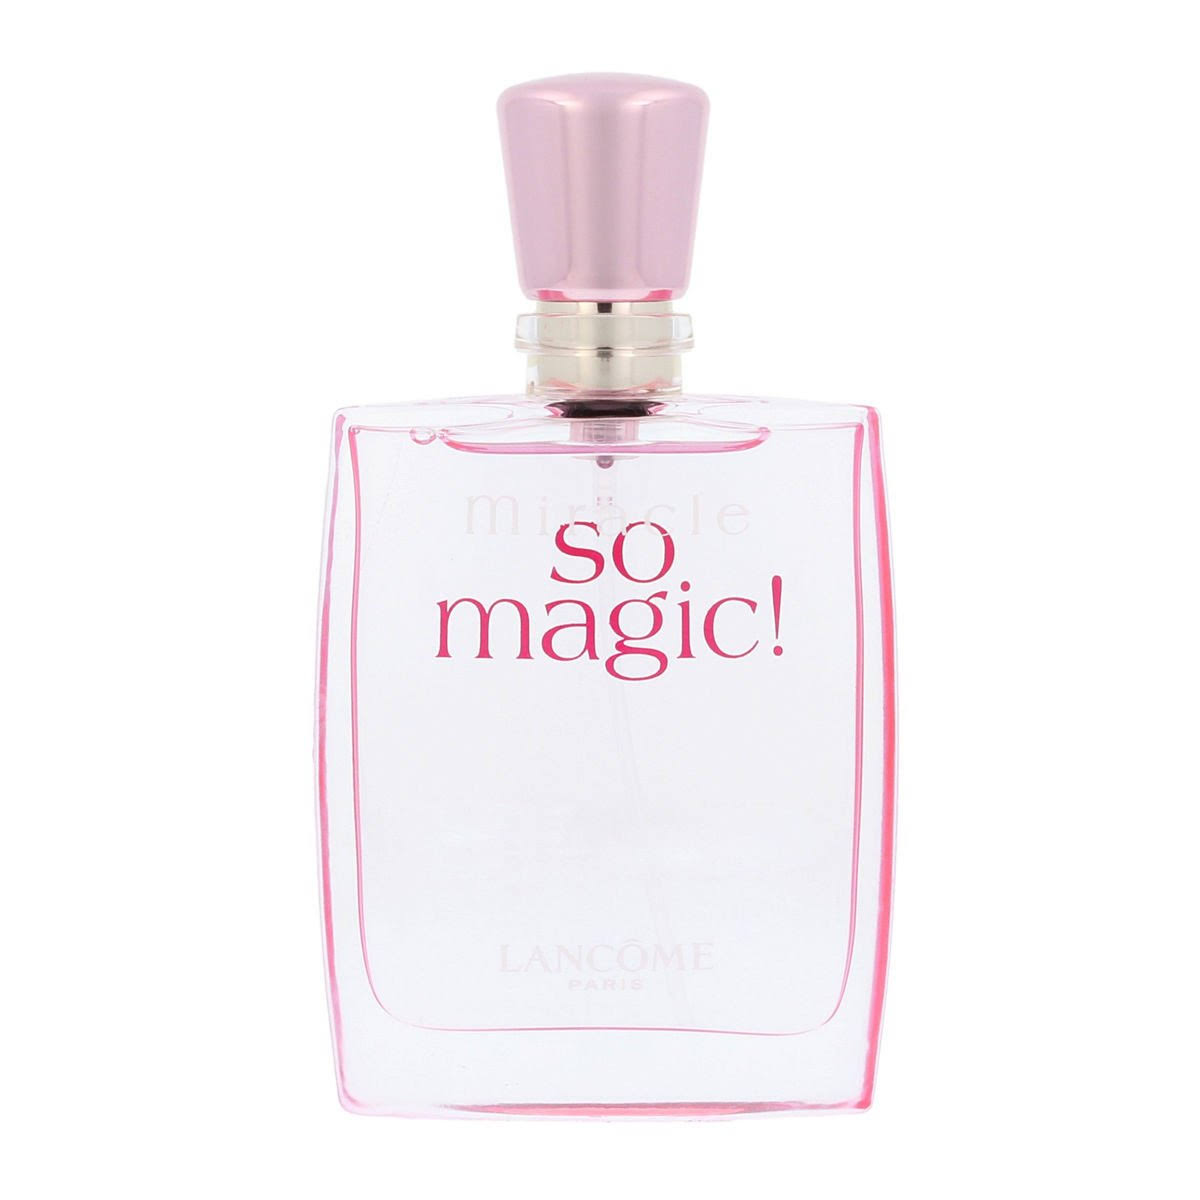 Lancome Miracle So Magic for Women Eau de Parfum Spray - 50ml